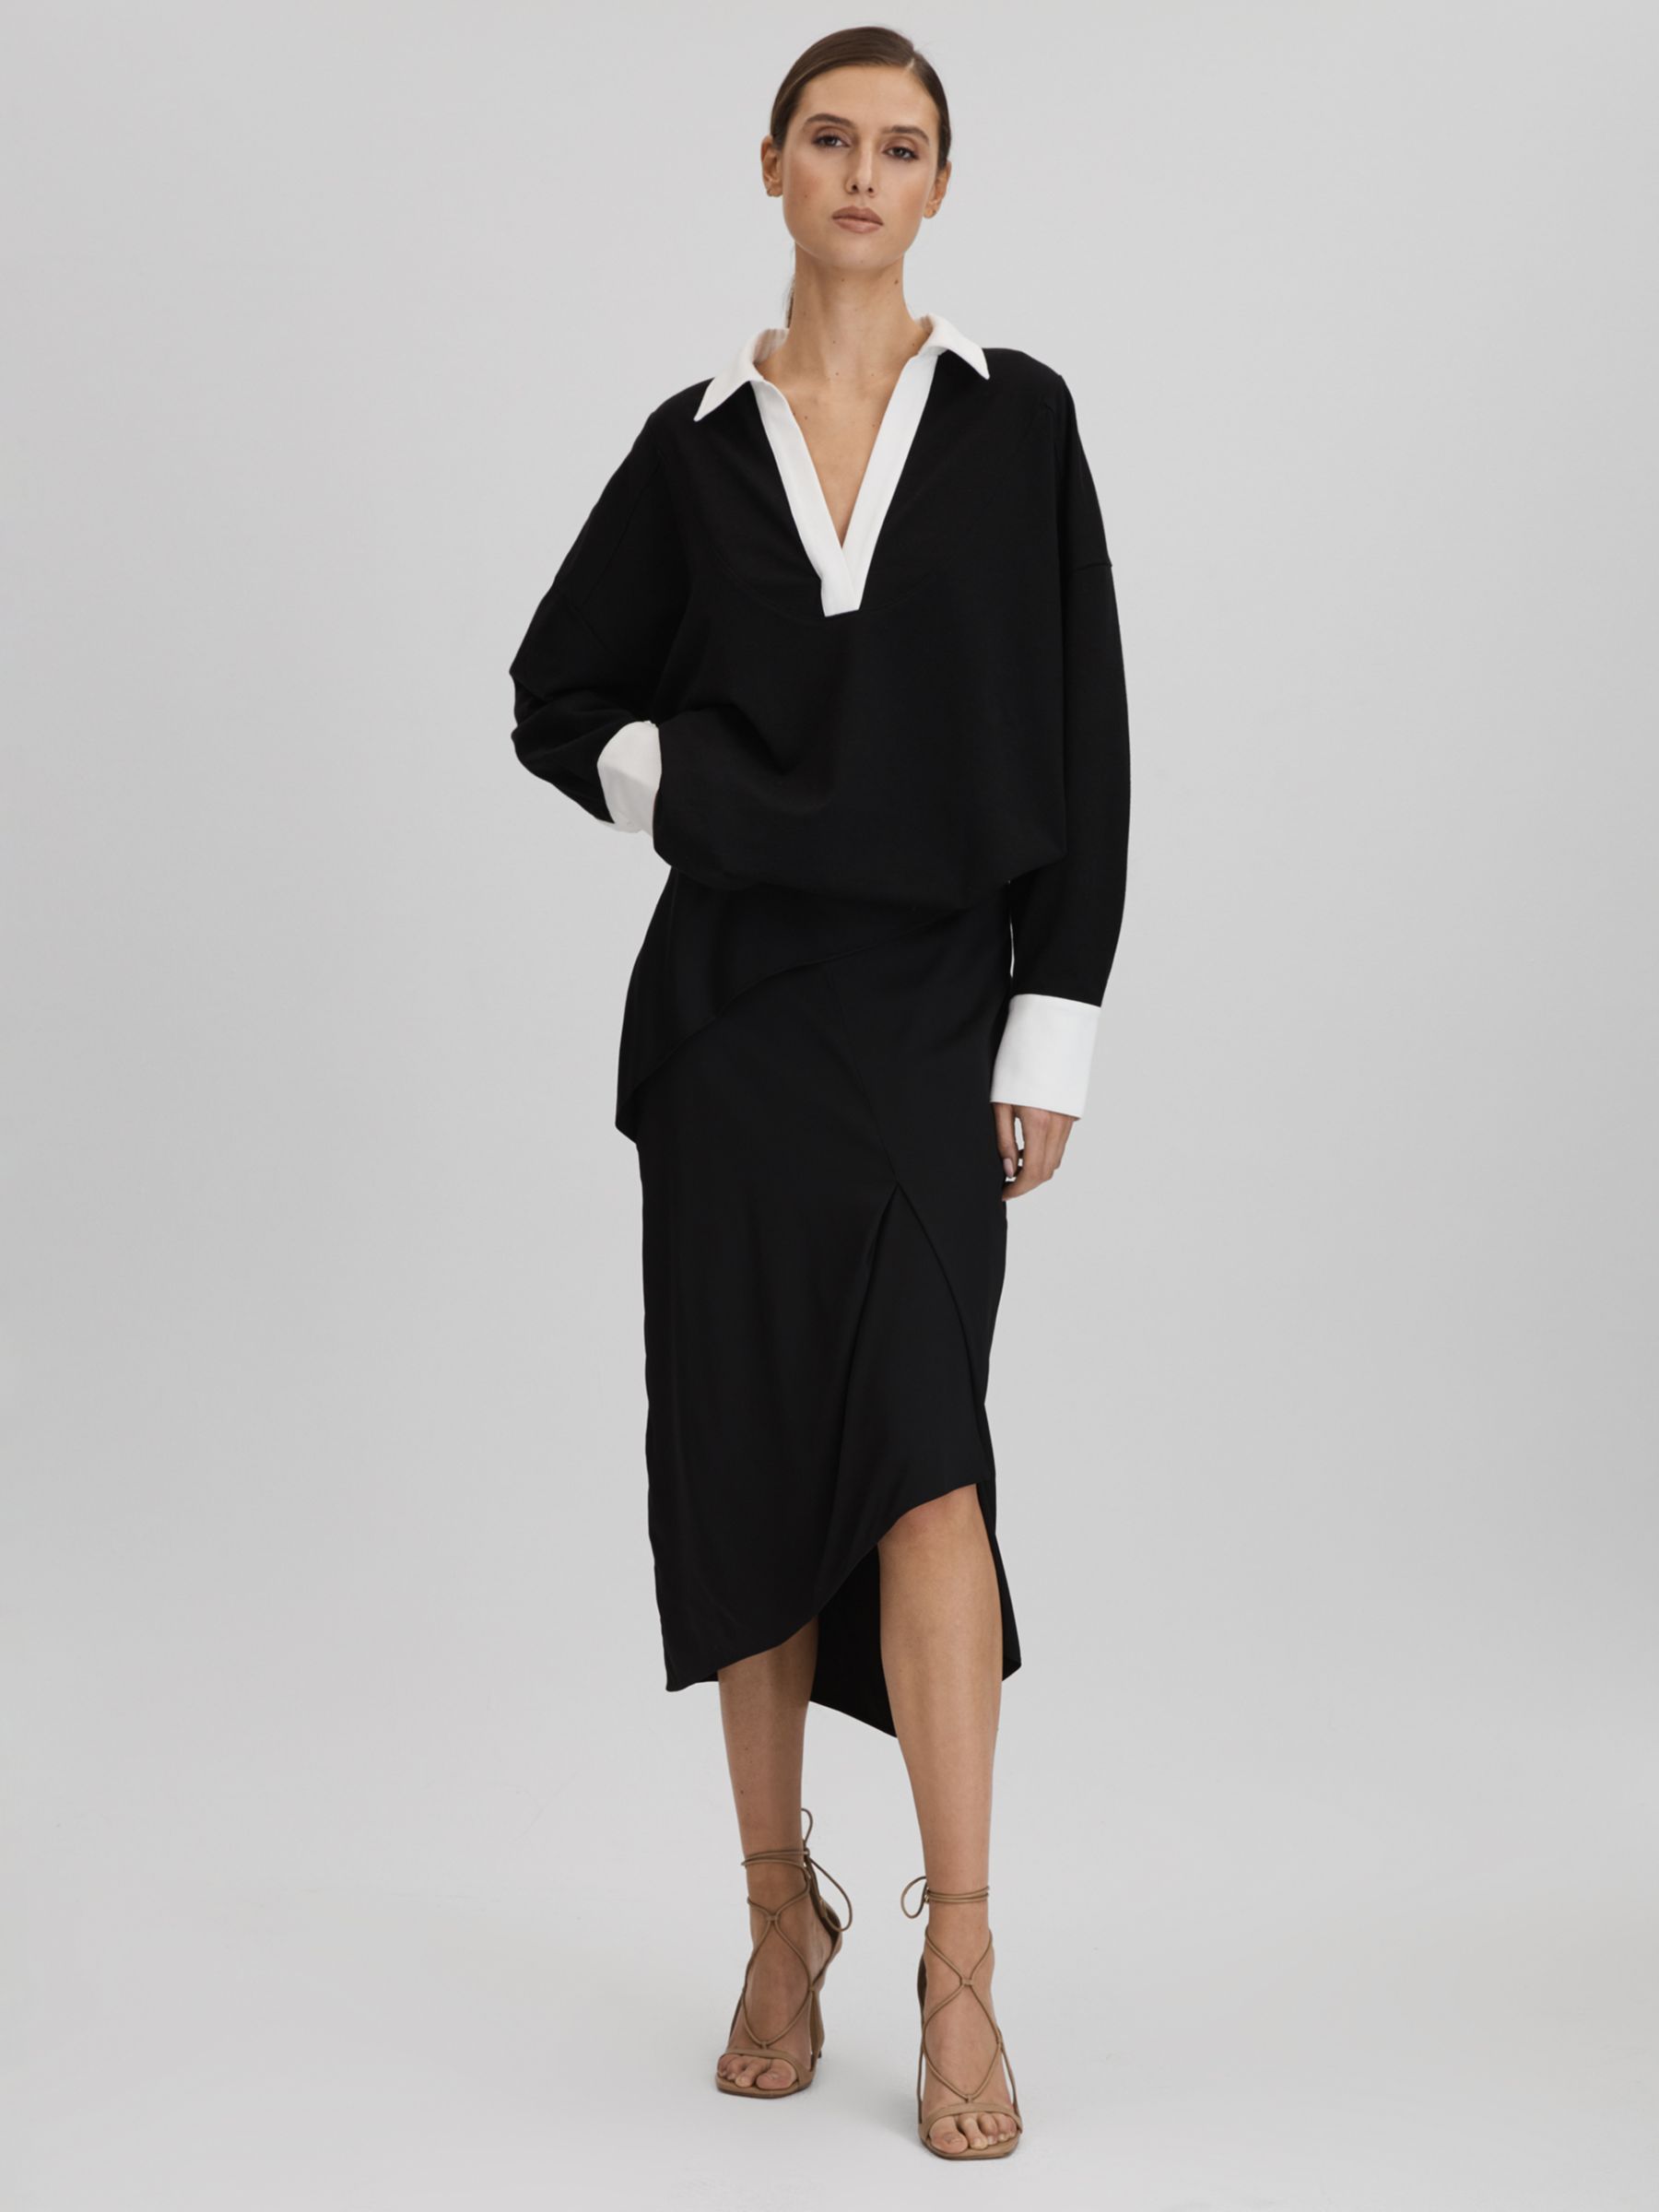 Buy Reiss Zaria Draped Midi Skirt, Black Online at johnlewis.com